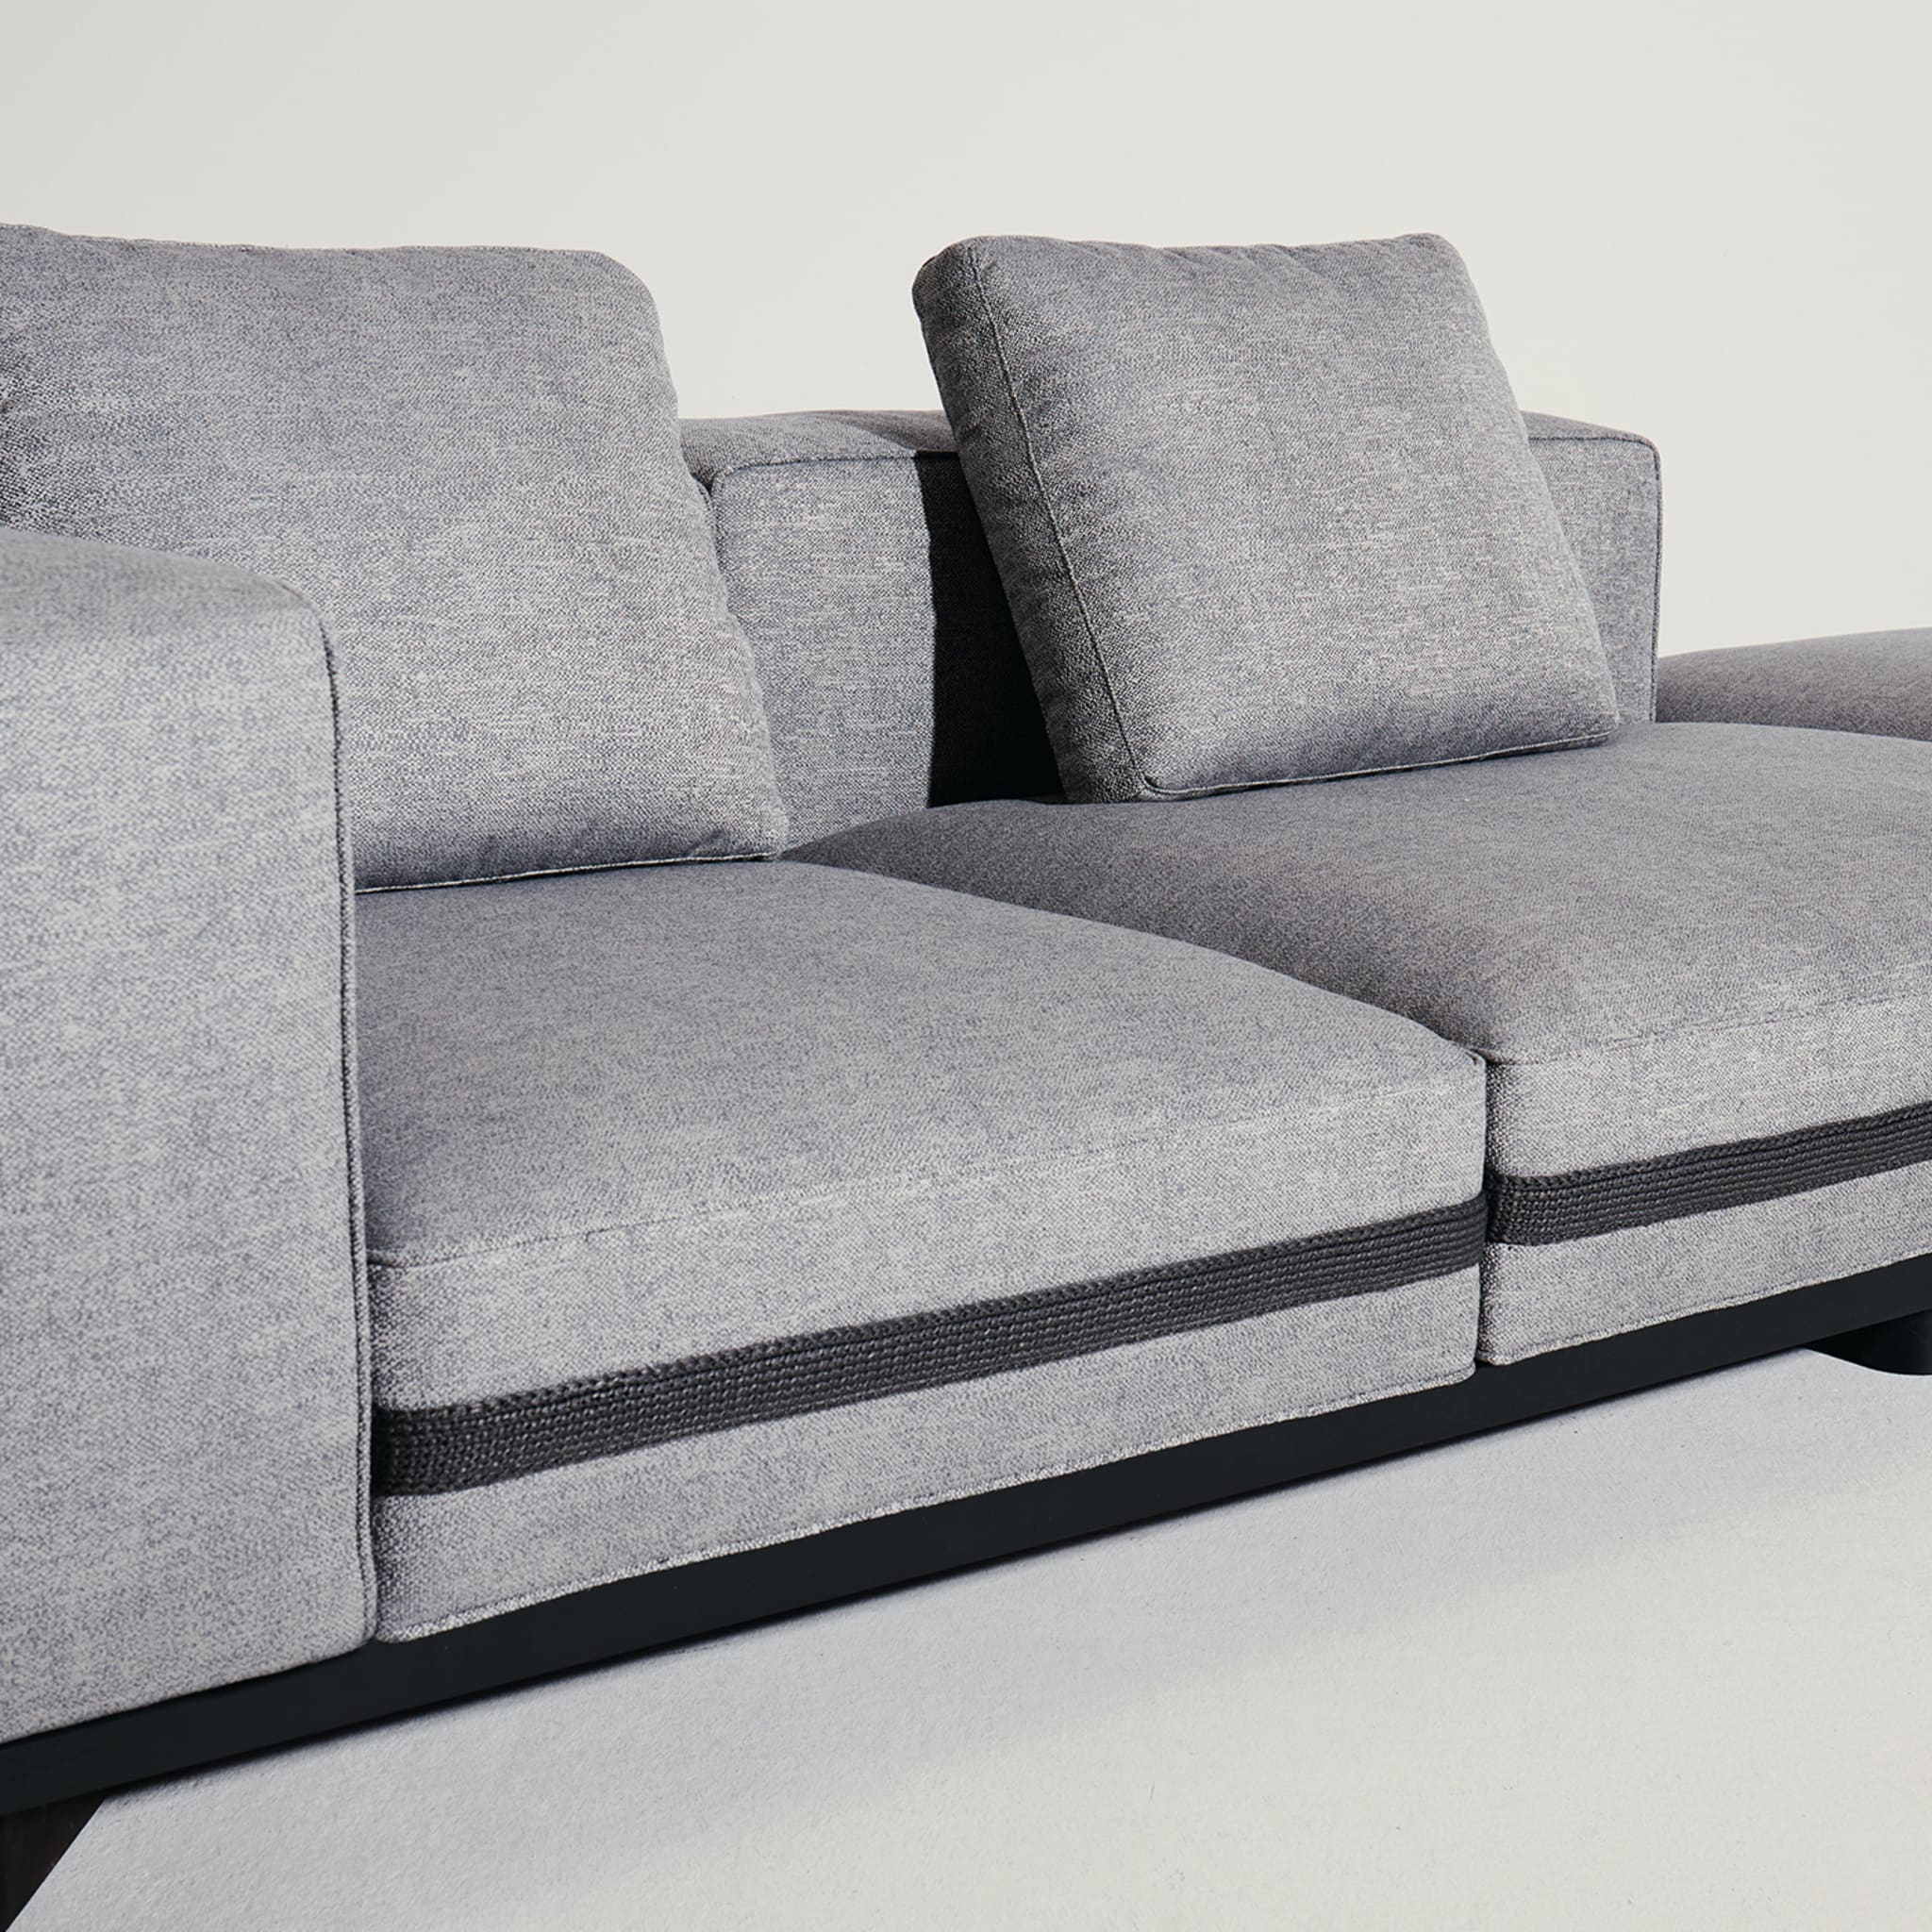 Saint Remy Gray Modular Sofa by Luca Nichetto - Alternative view 1